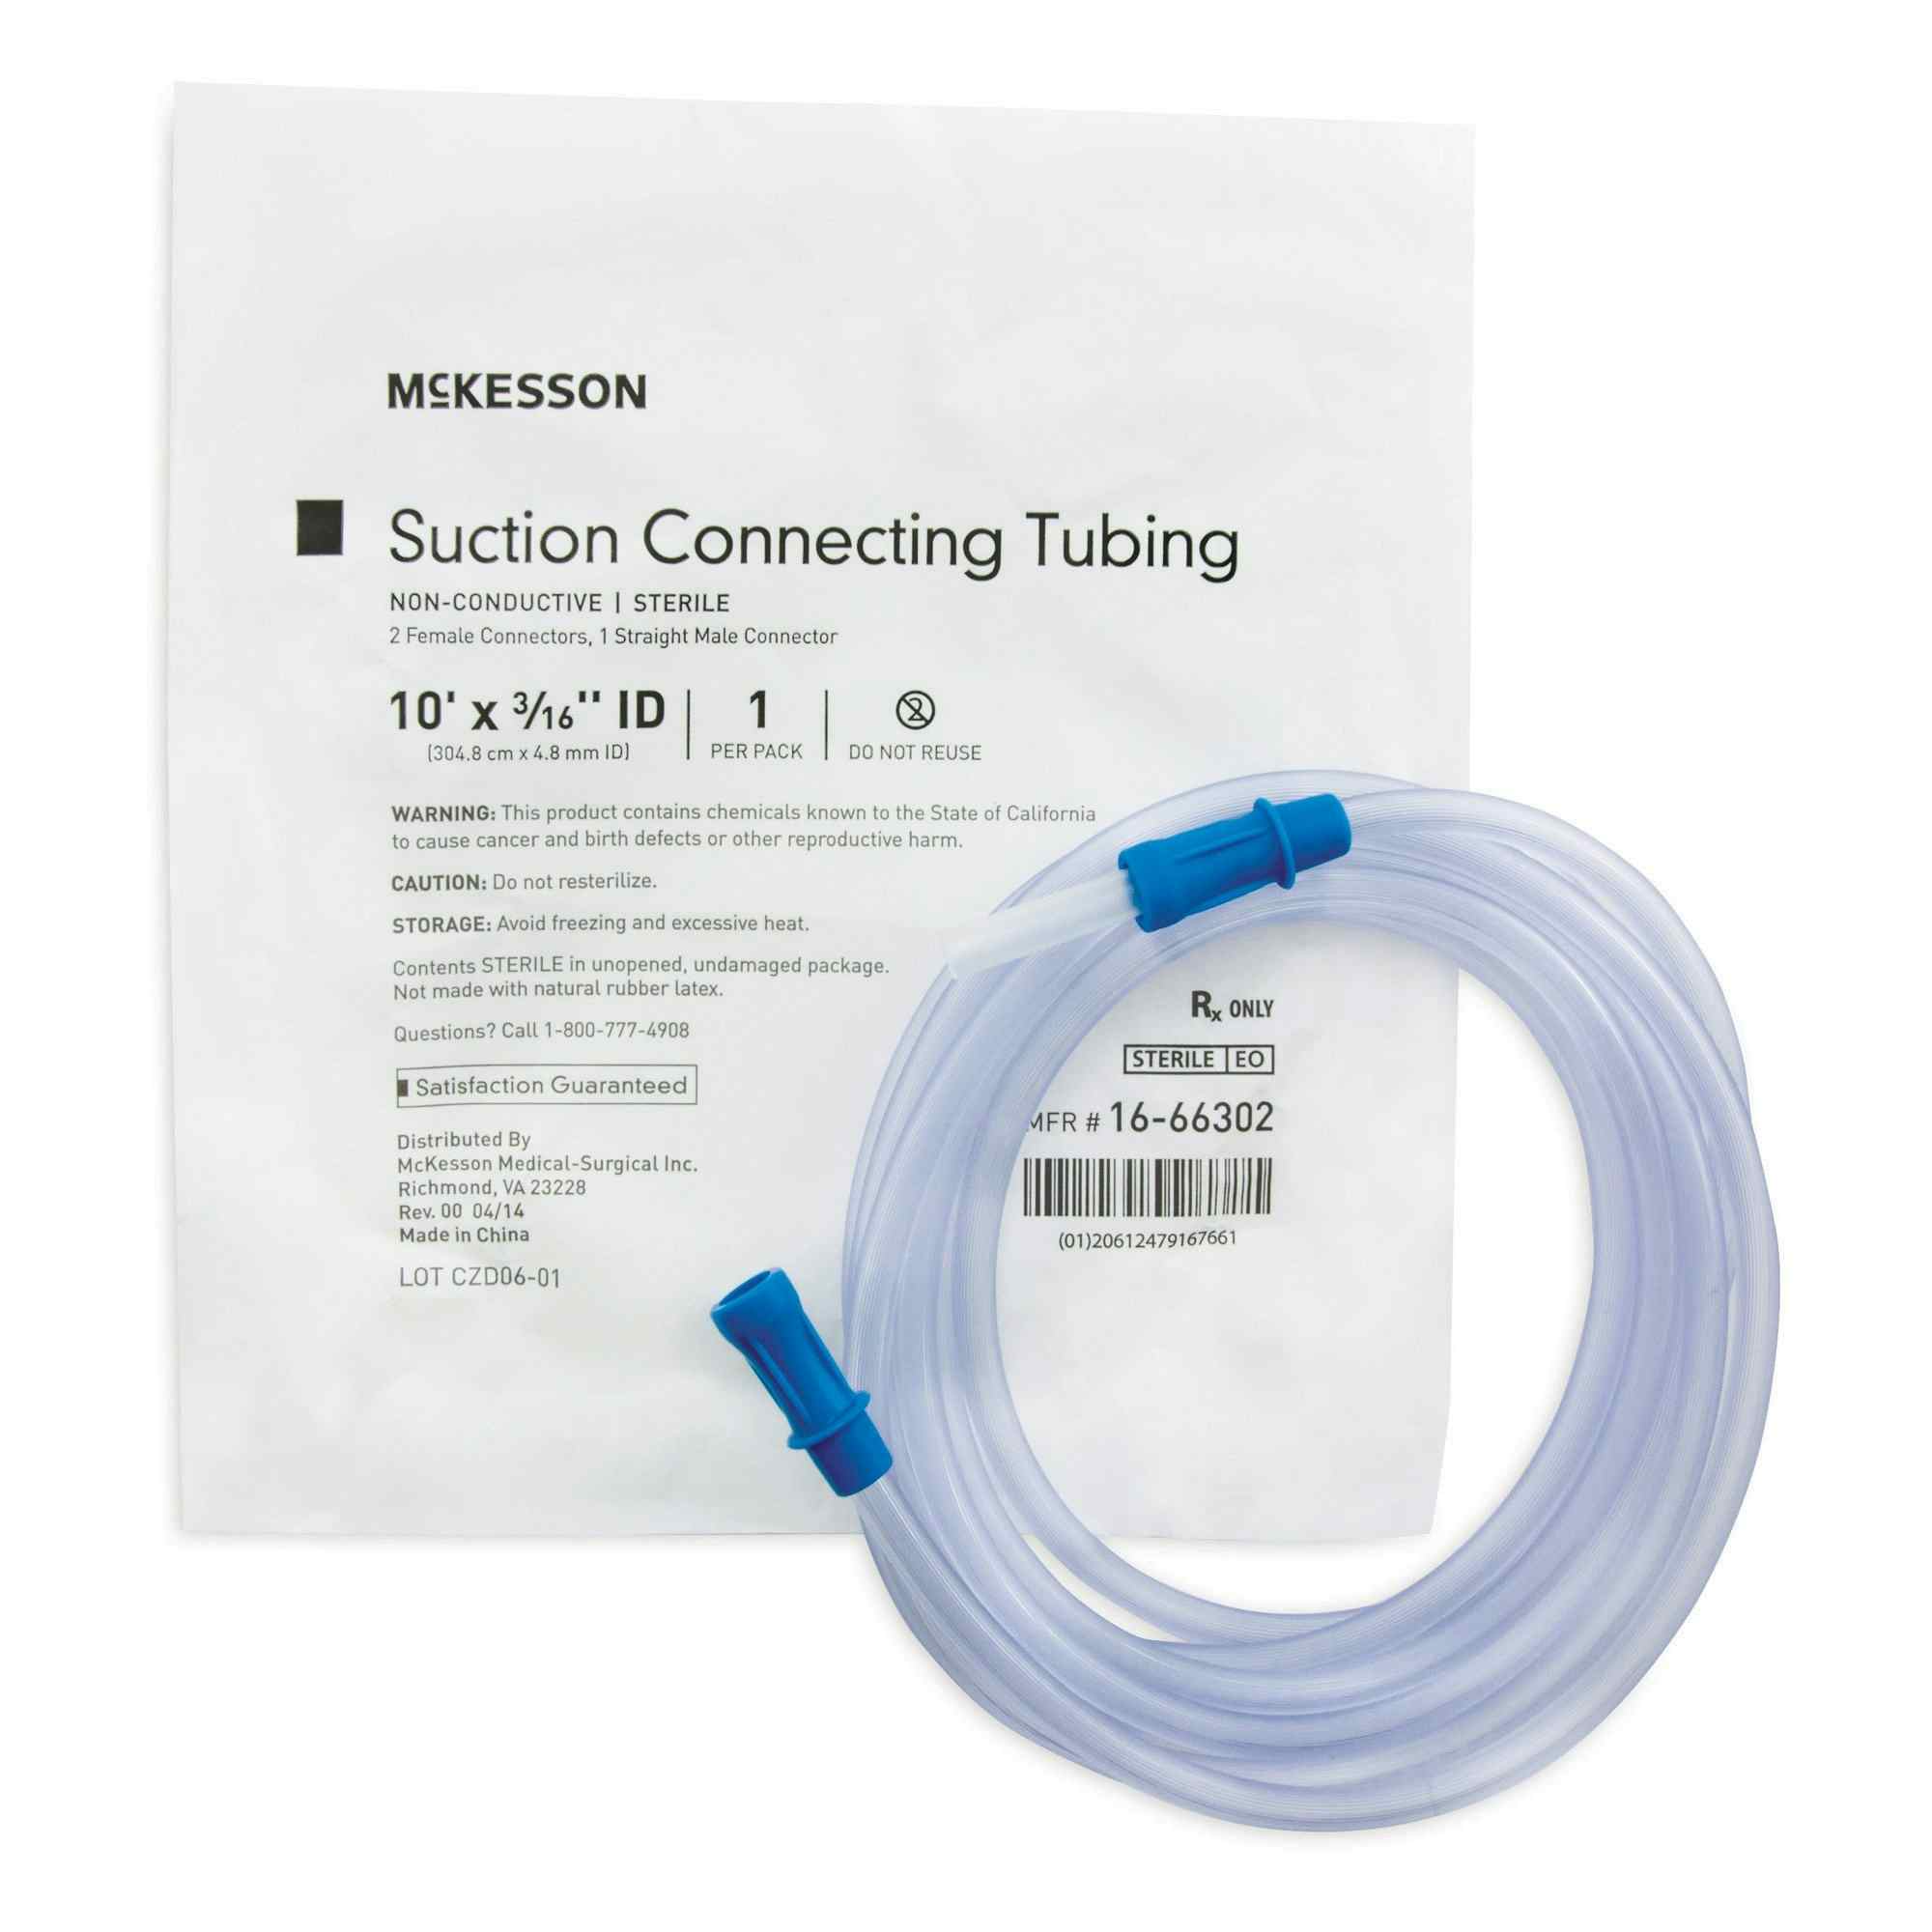 McKesson Suction Connecting Tube, Non-Conductive, 3/16" ID, 16-66302, 10' - Case of 50